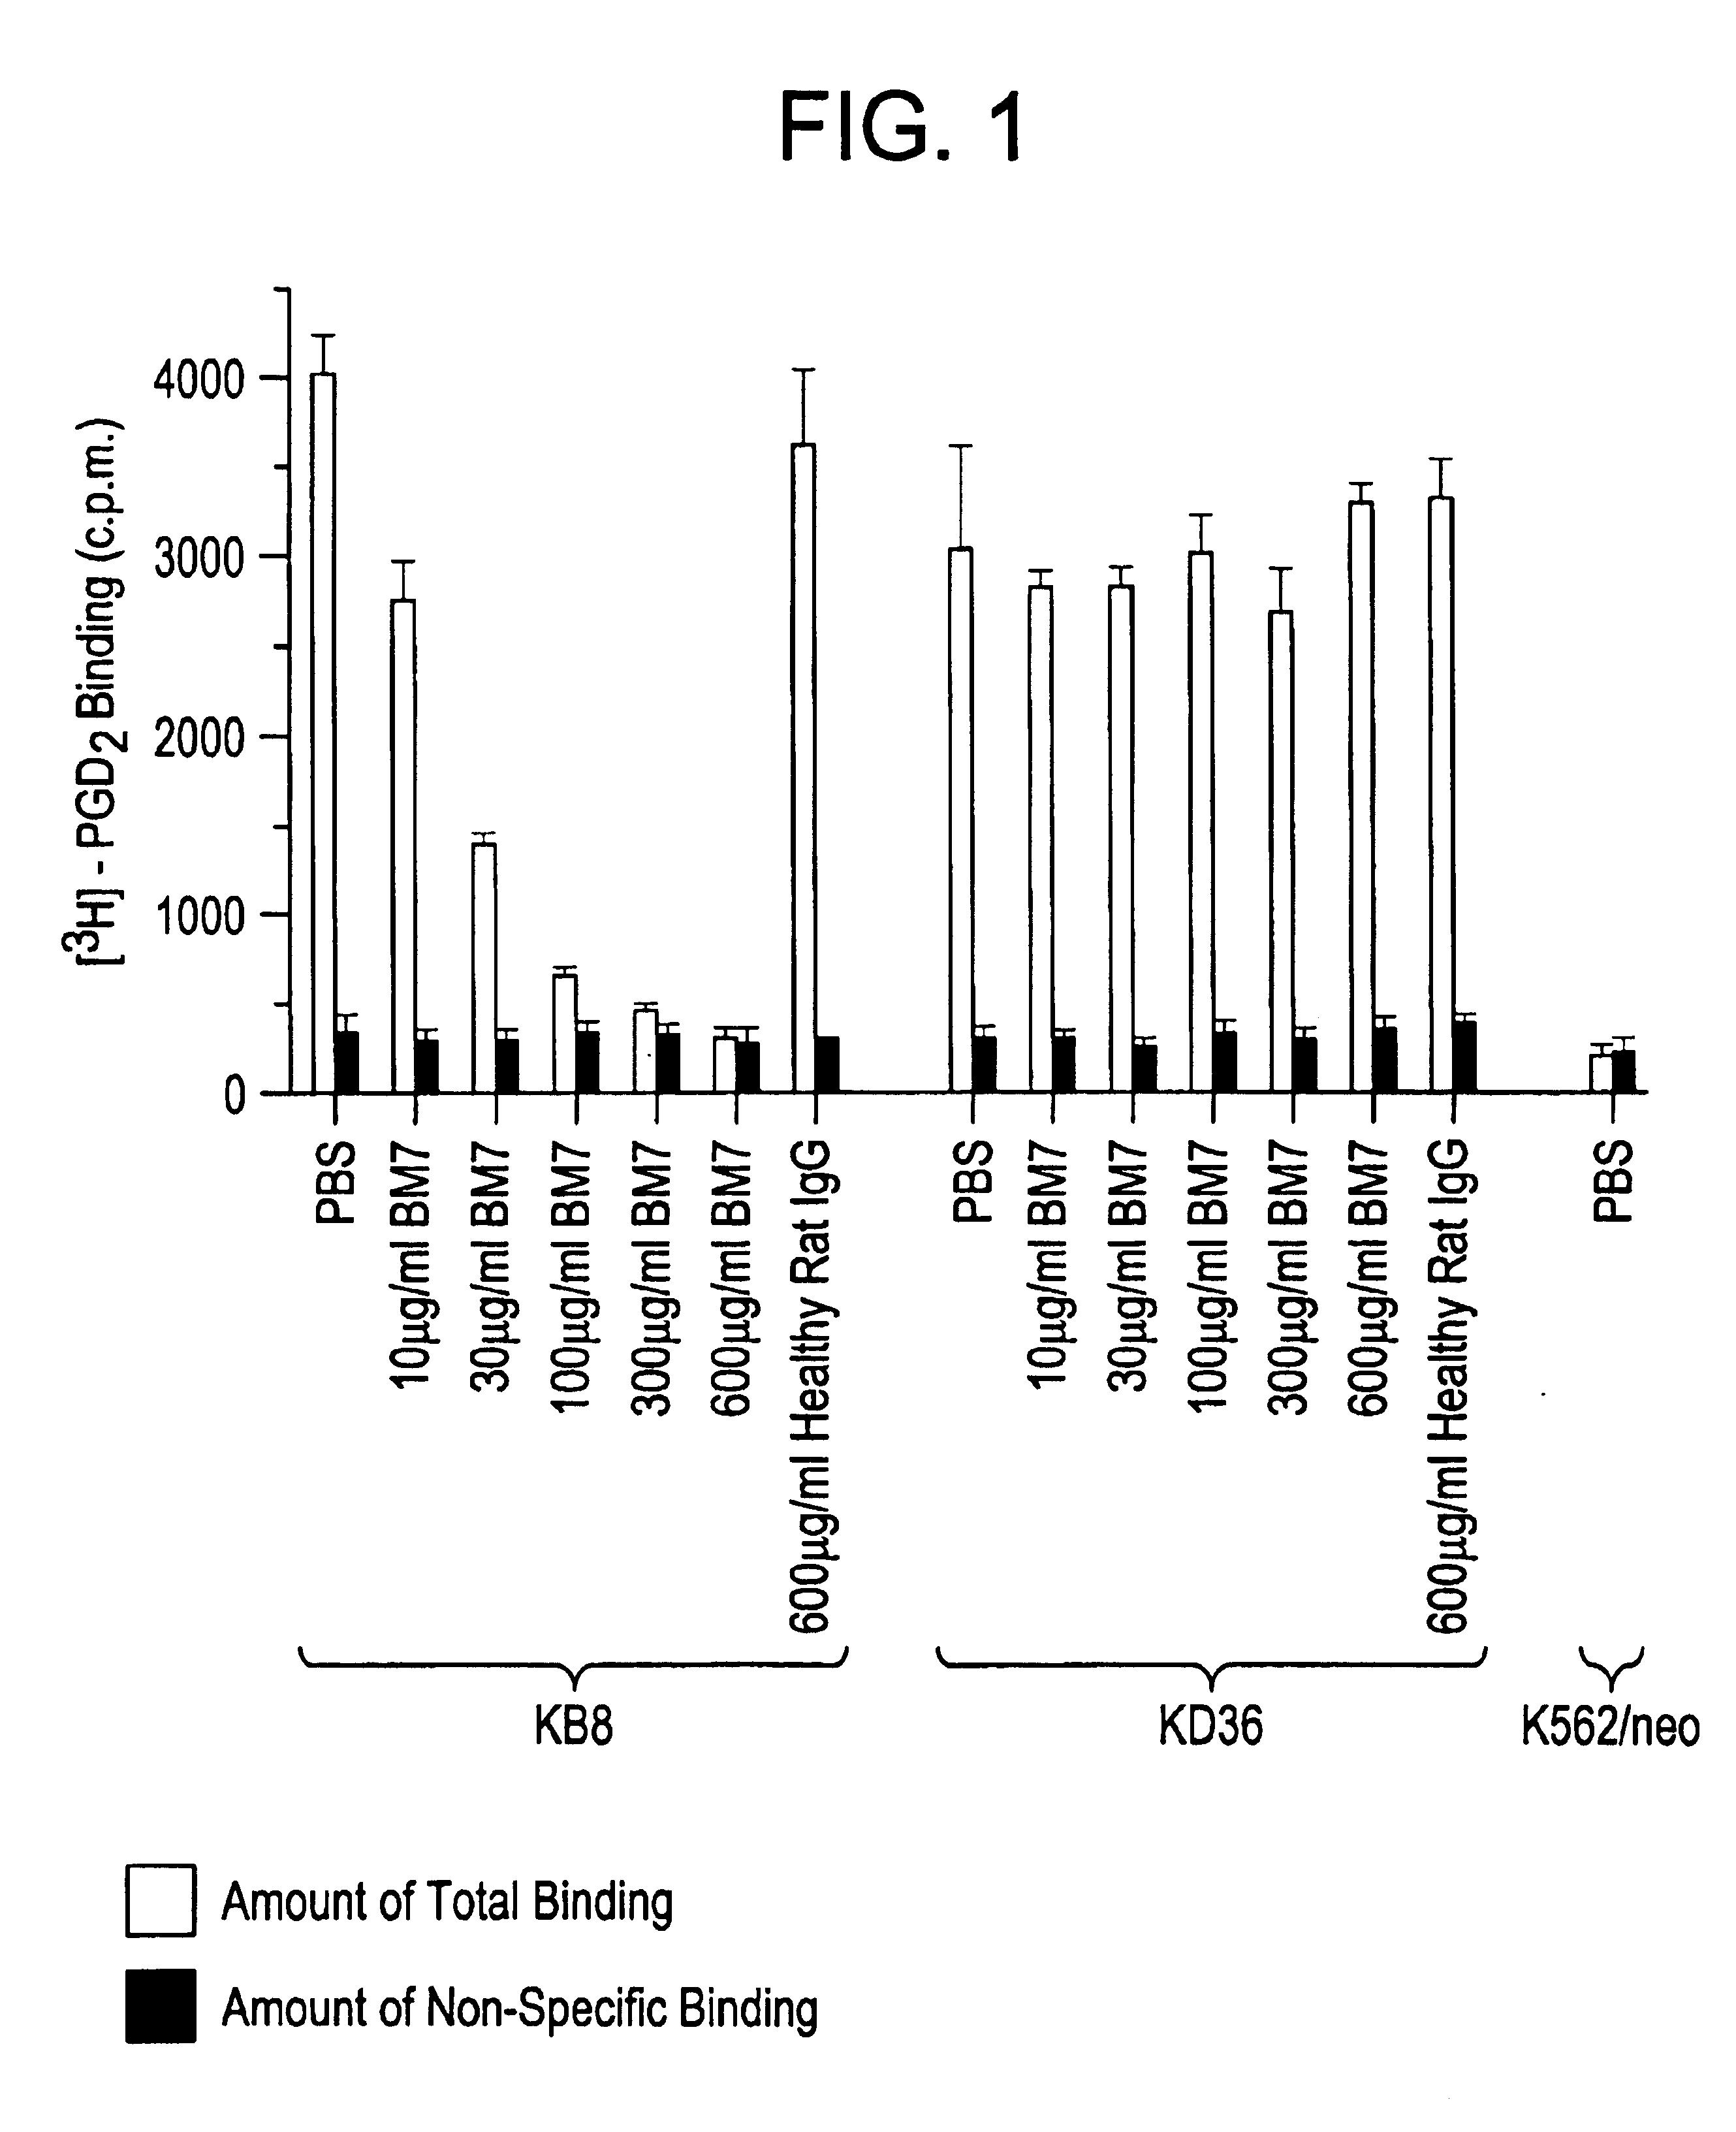 Method of identifying properties of substance with respect to human prostaglandin D2 receptors